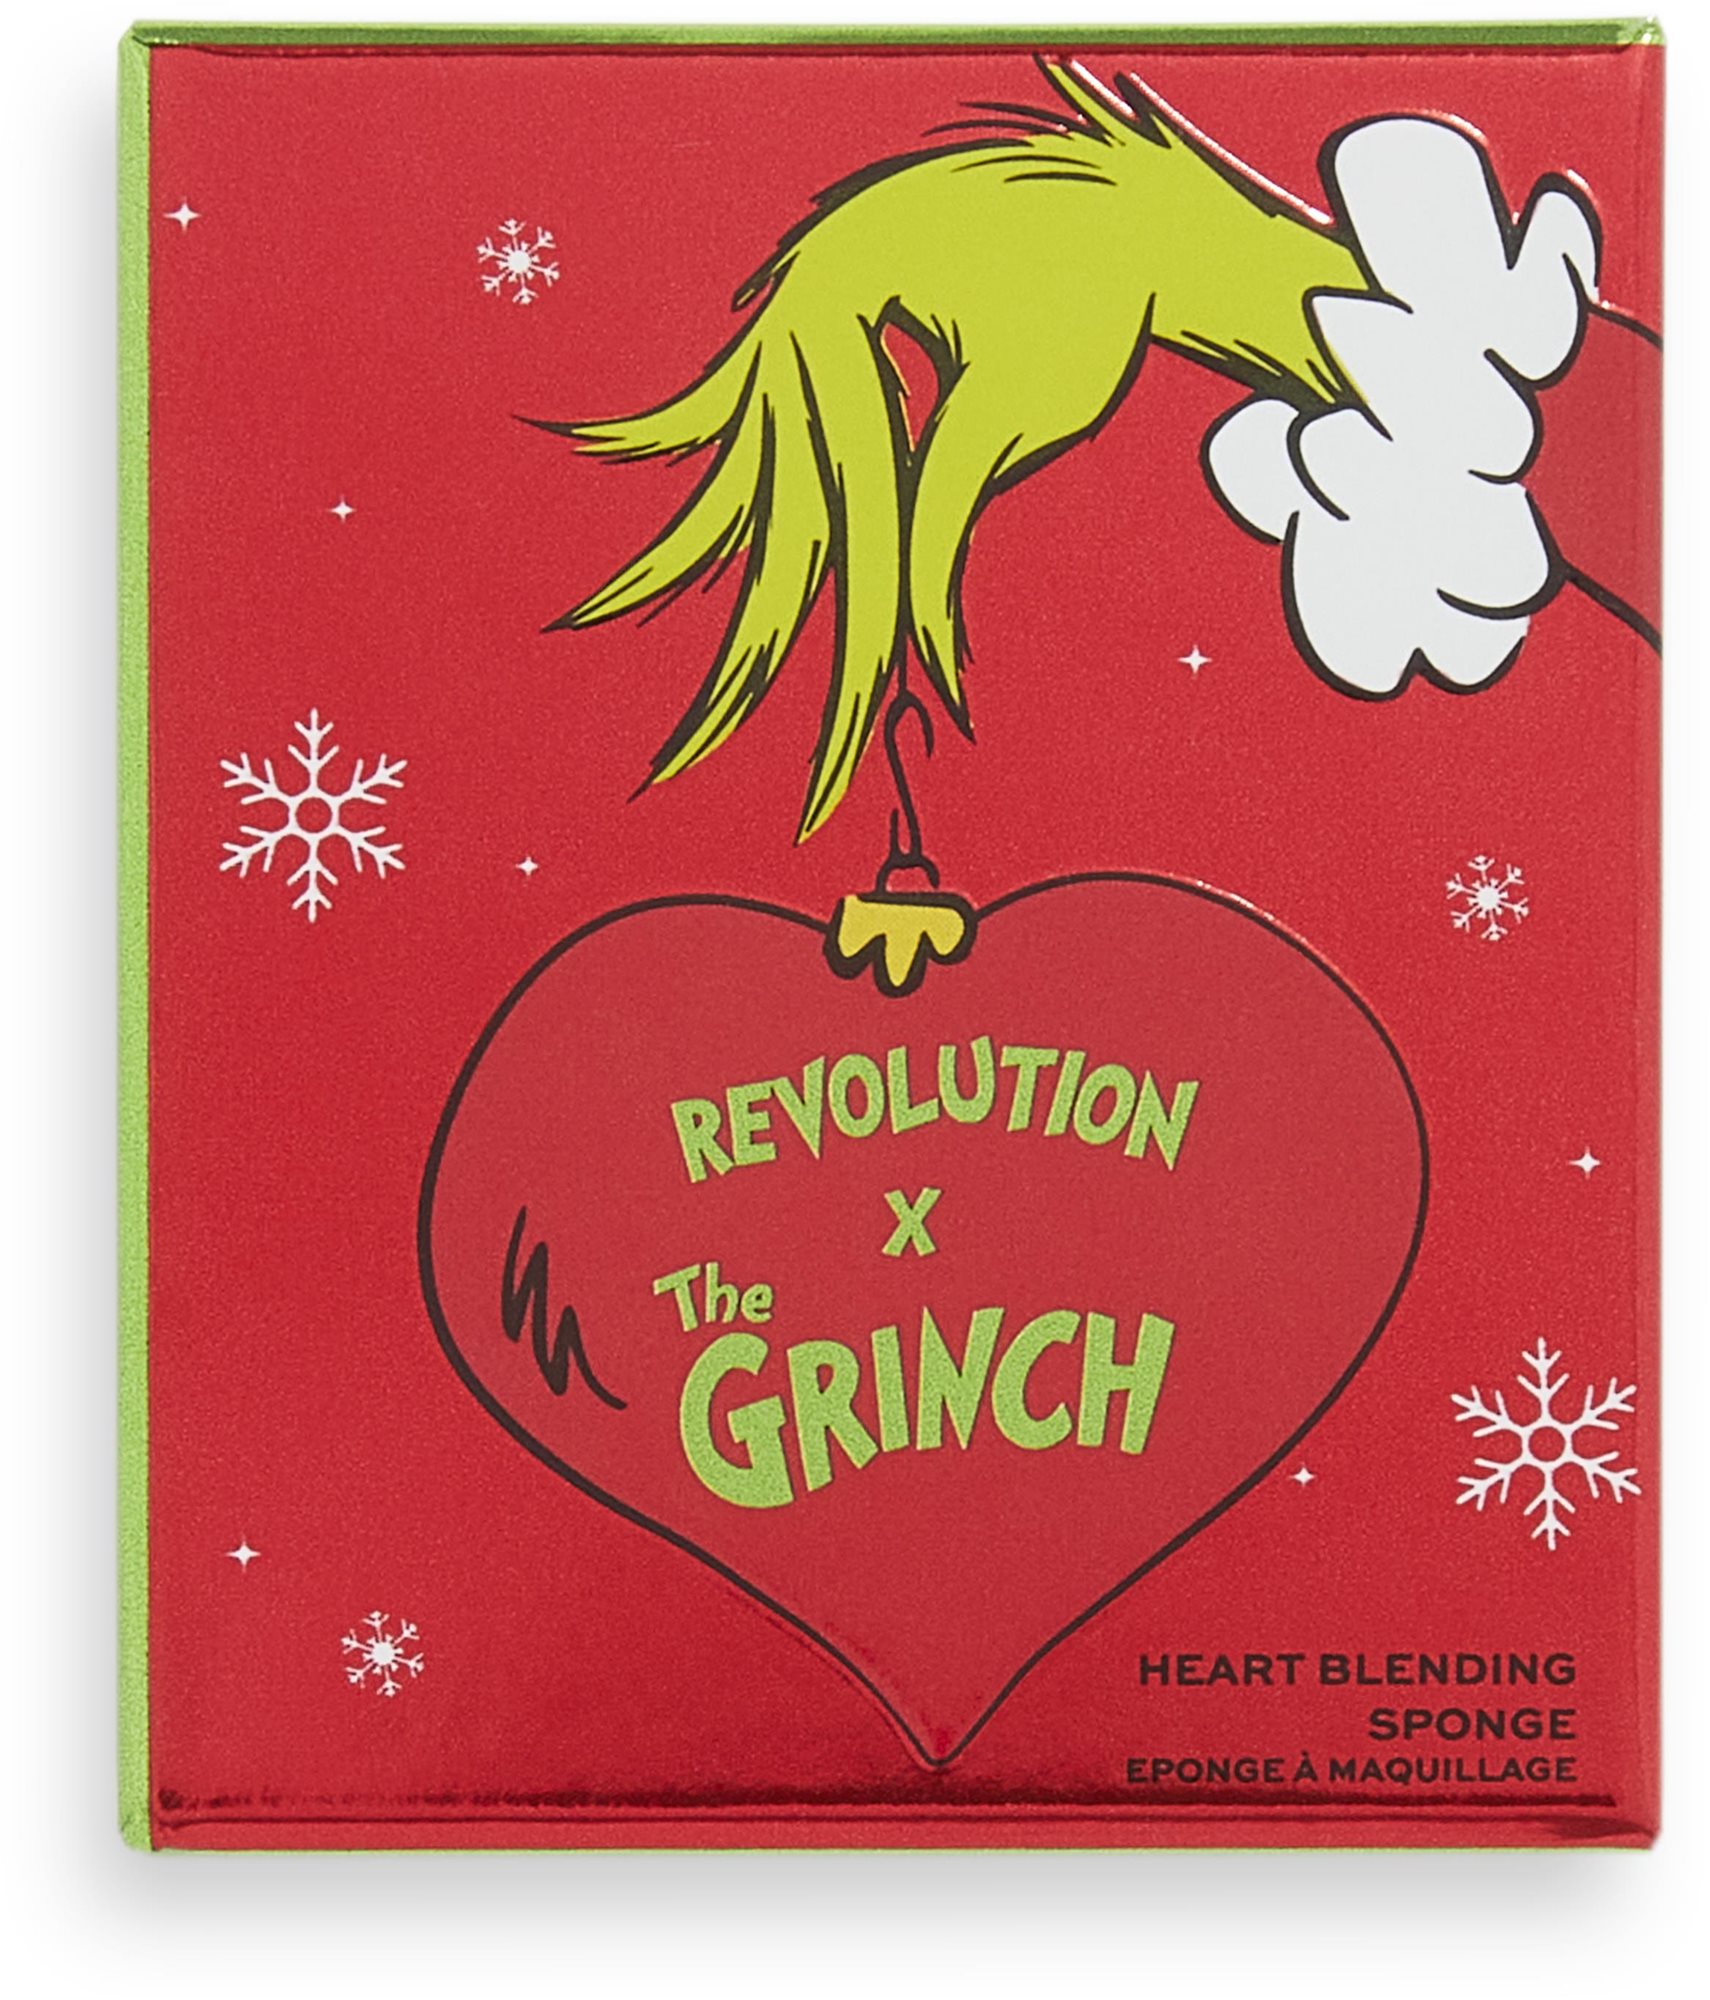 REVOLUTION The Grinch X Revolution Whoville Heart Beauty Sponge